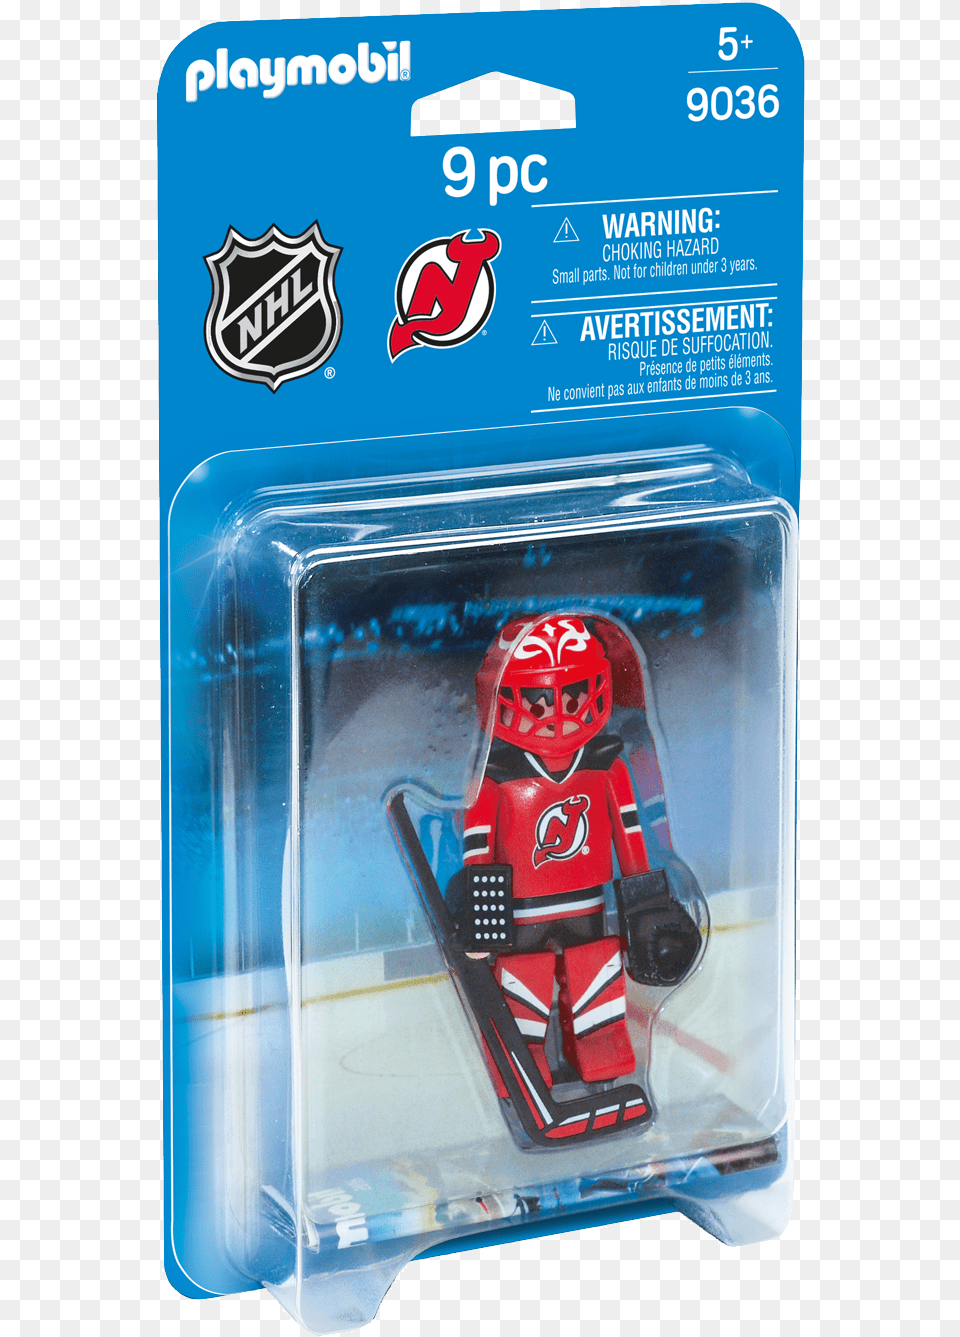 Nhl New Jersey Devils Goalie 9036 Playmobil Usa Playmobil Winnipeg Jets, Helmet, Robot, Boy, Child Png Image